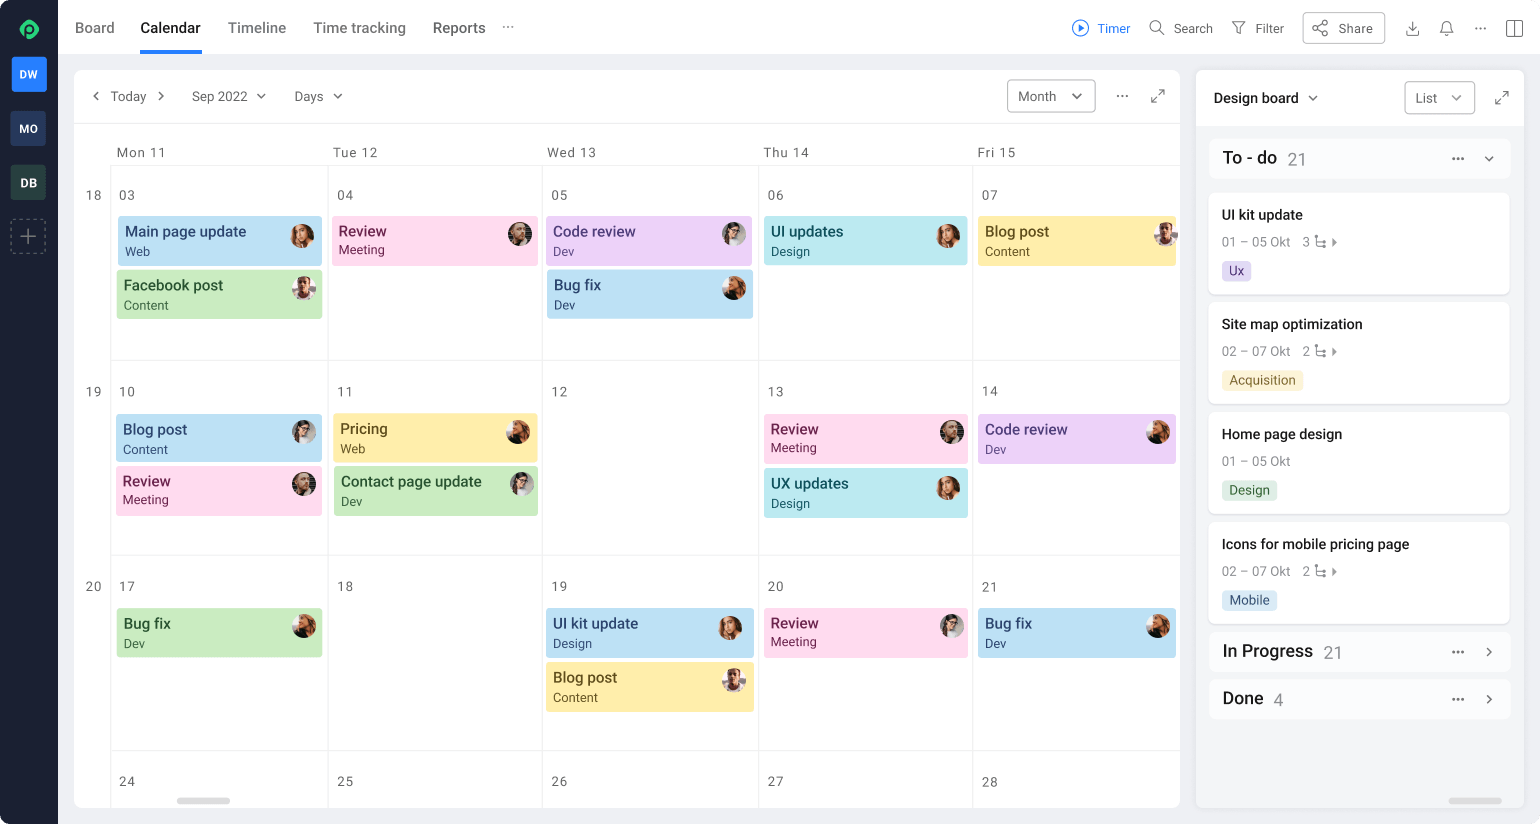 Team Calendar